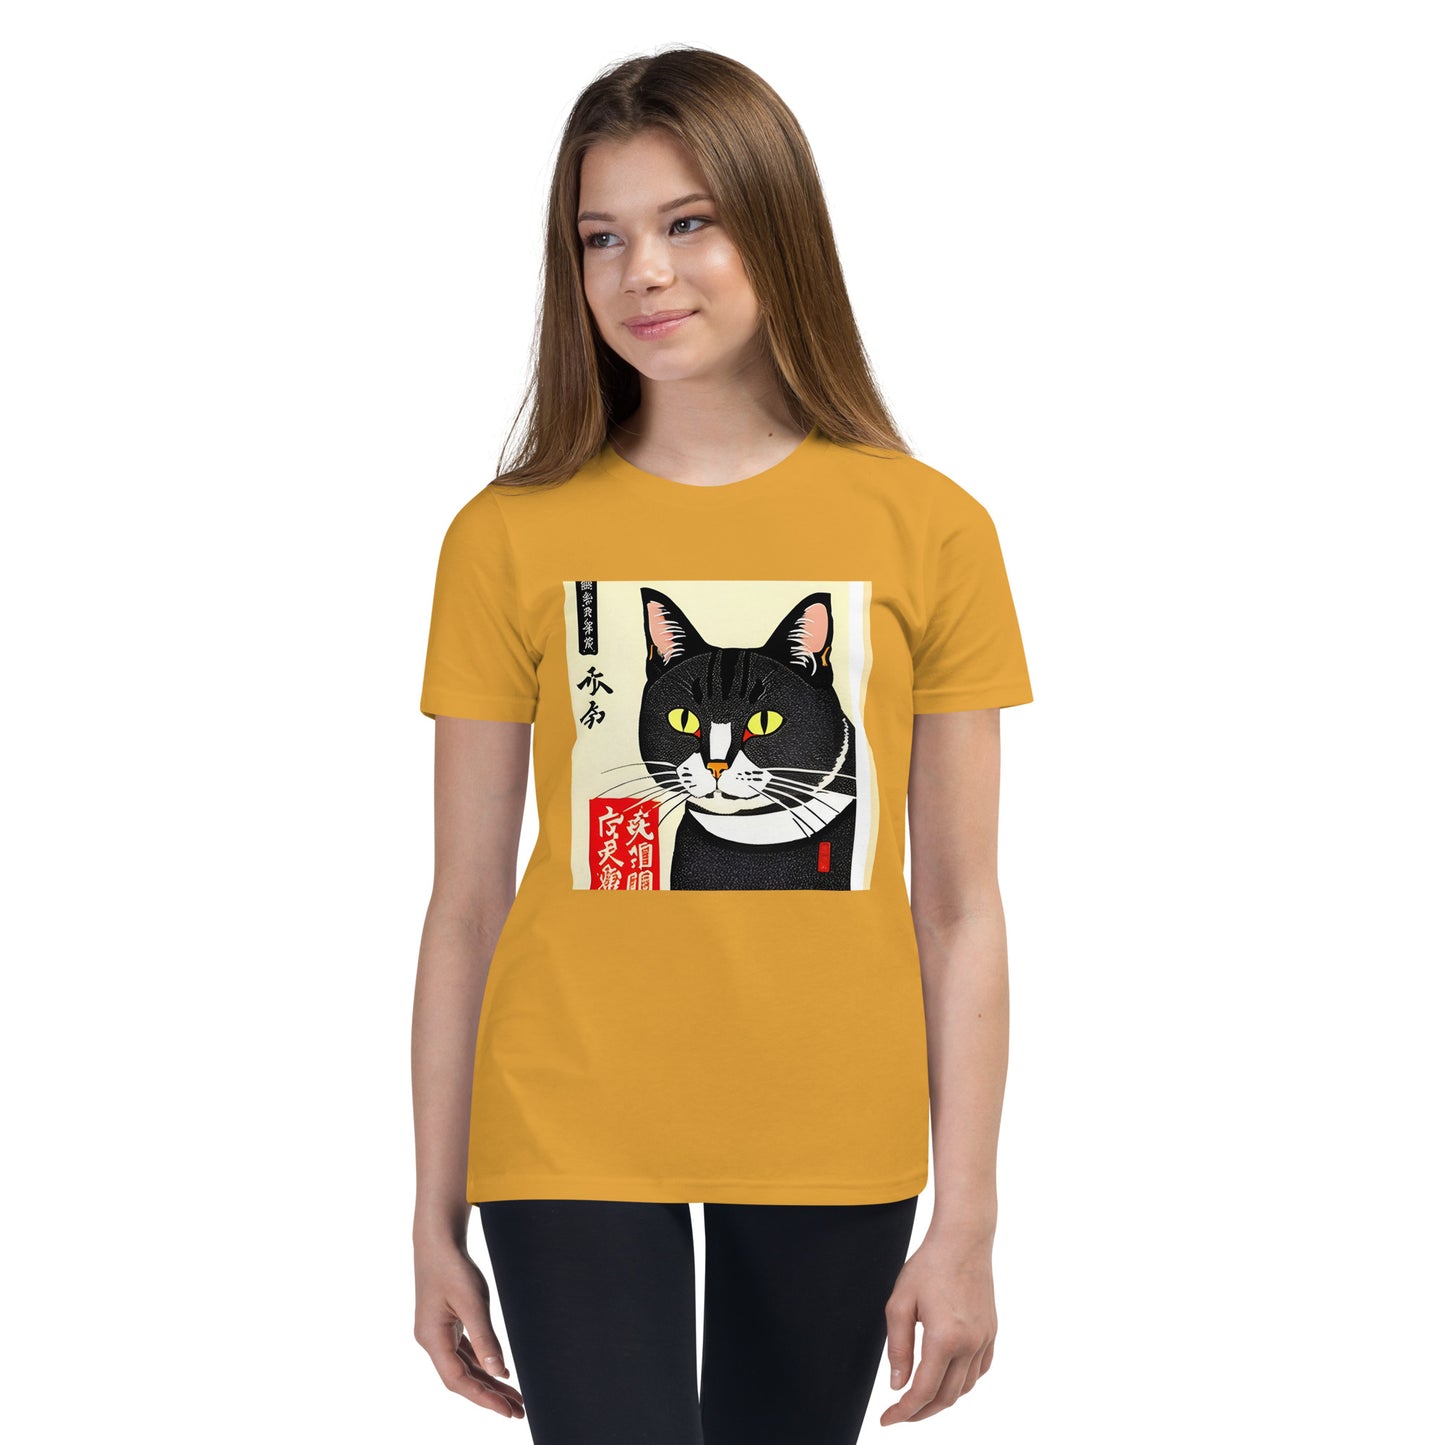 Meowsome Kid's T-Shirt - 024